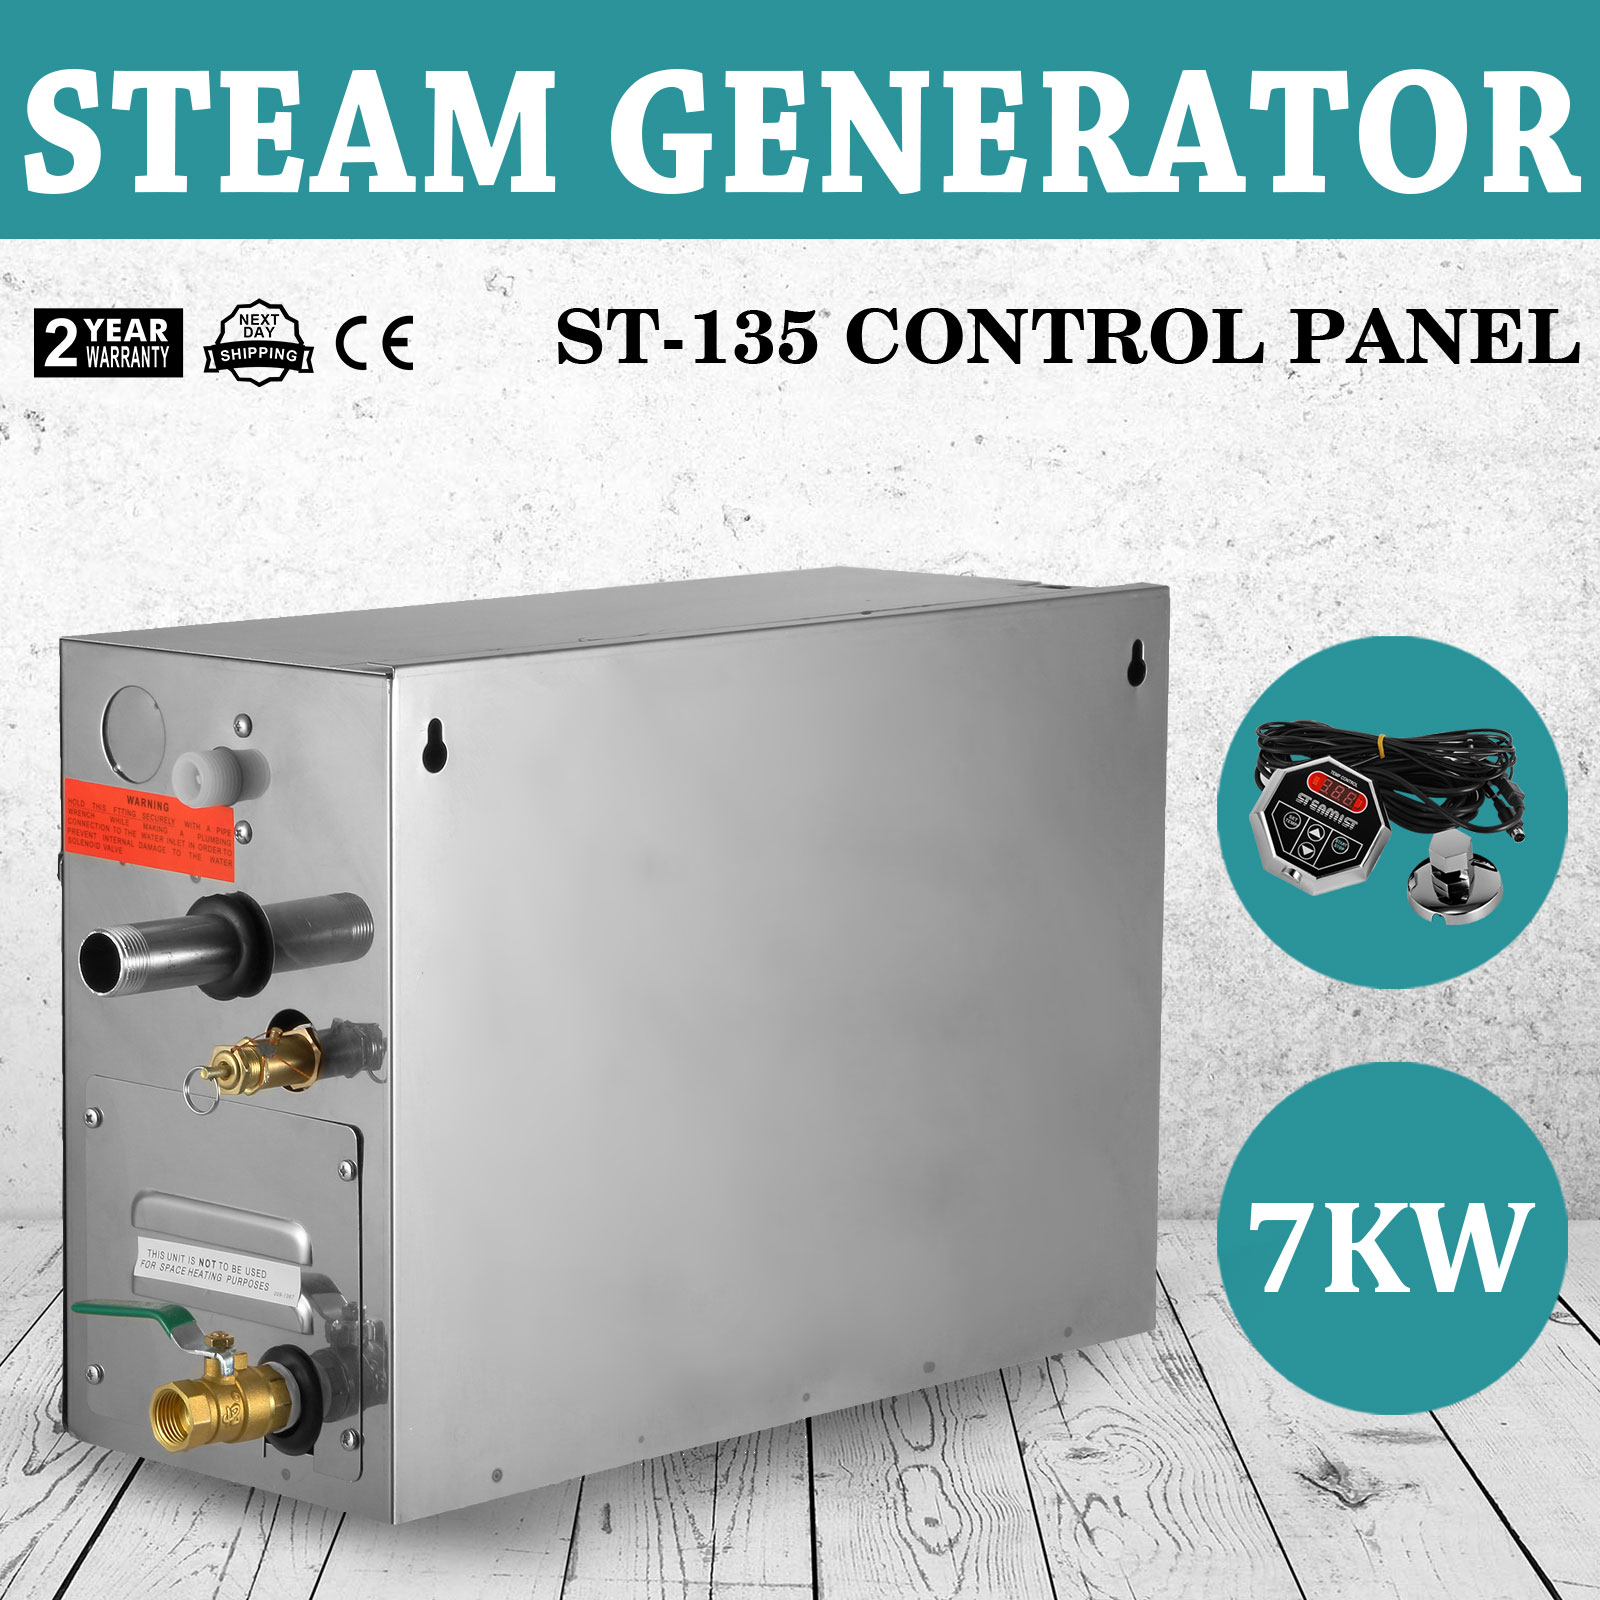 Hot steam generator фото 61